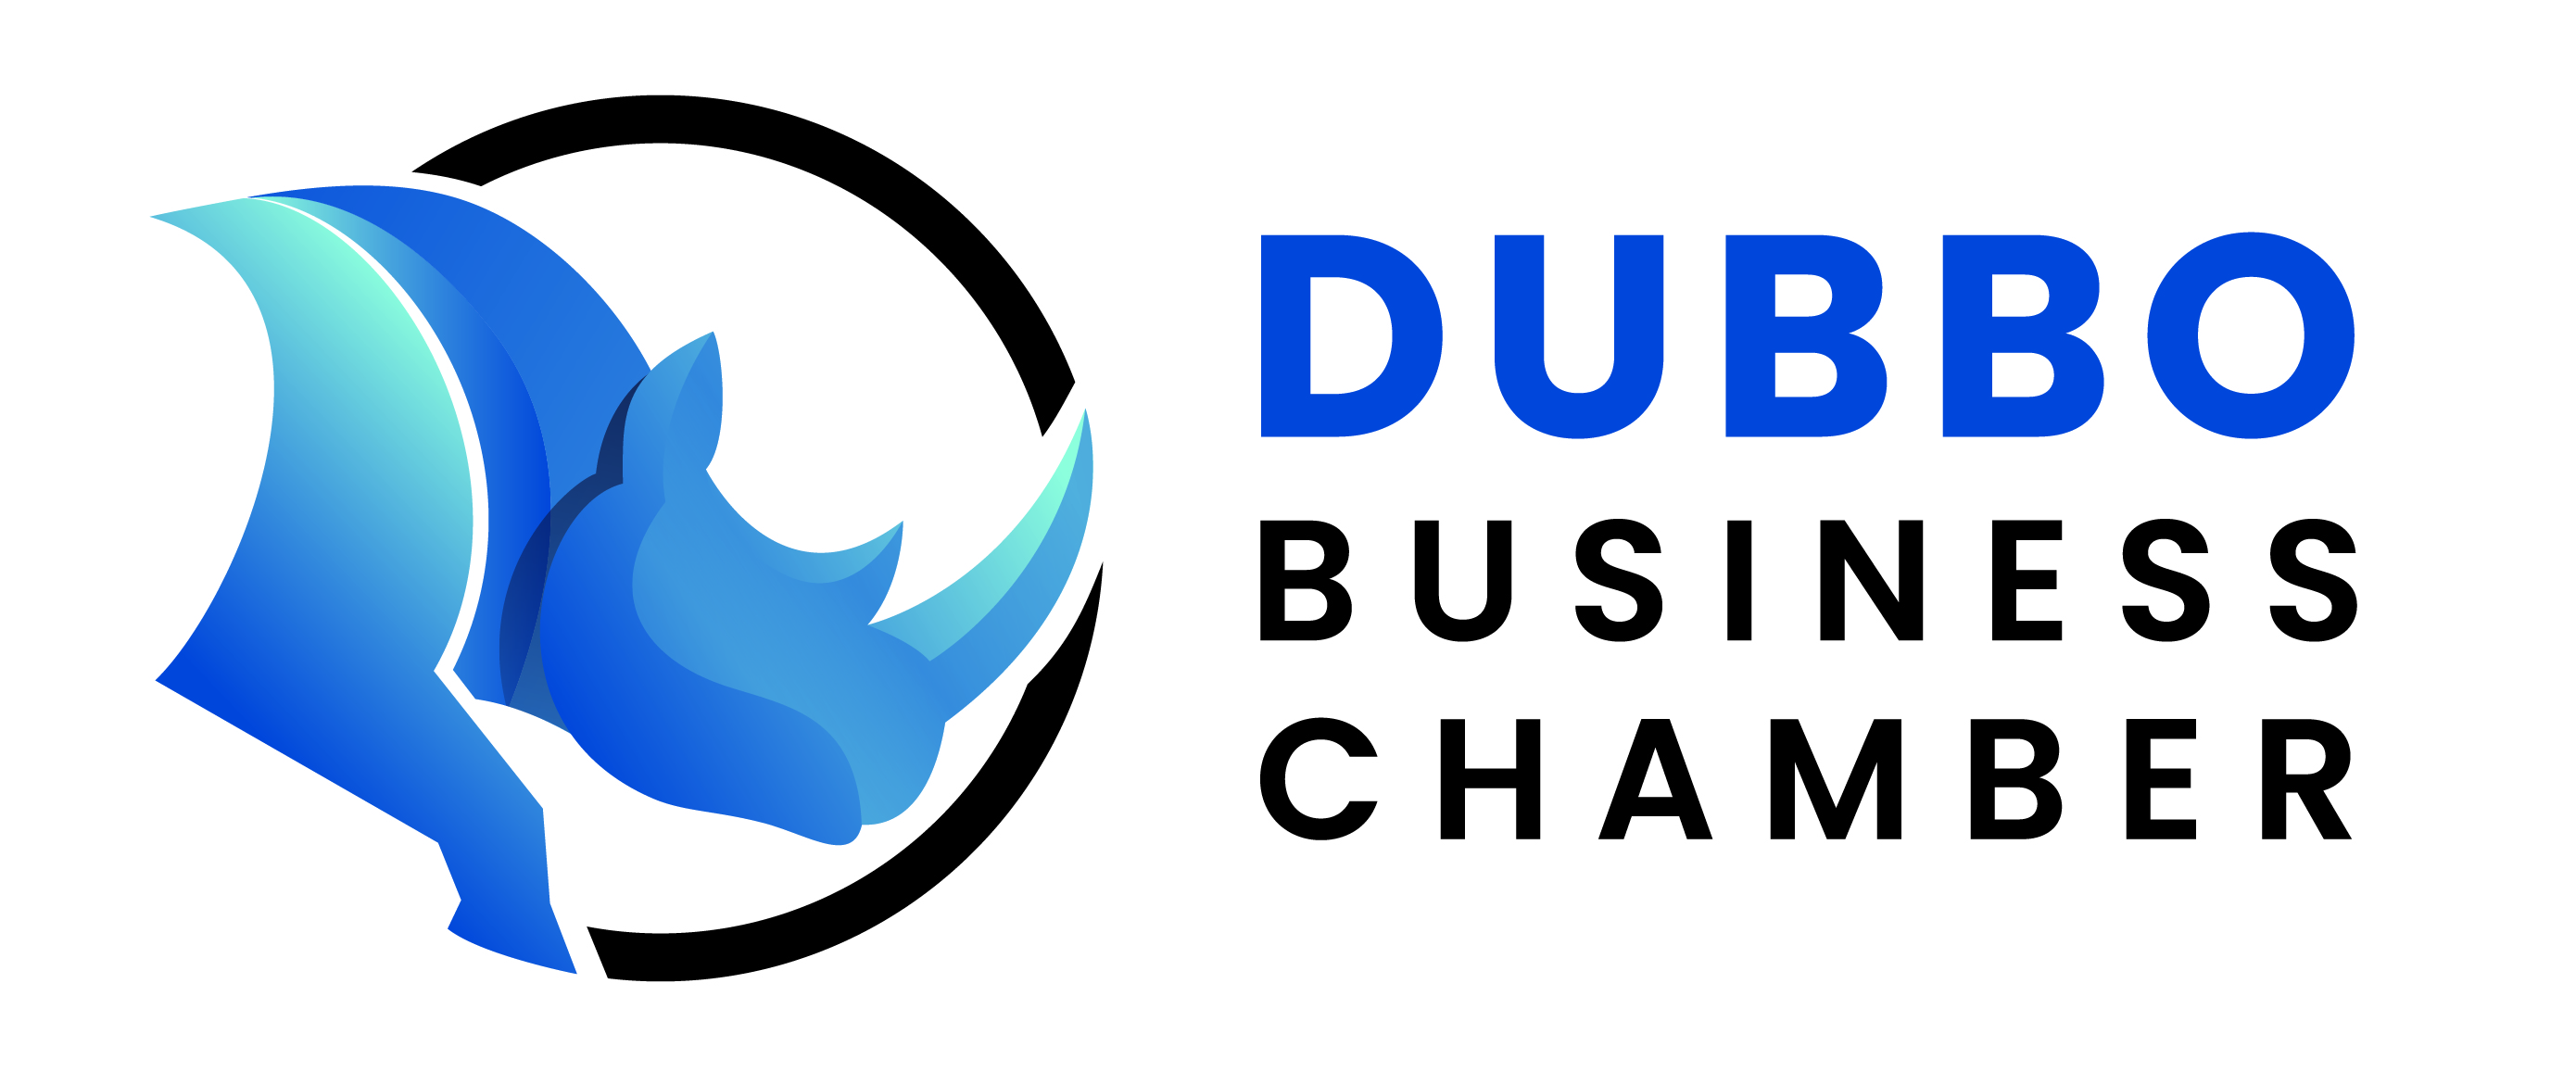 Dubbo Business Chamber